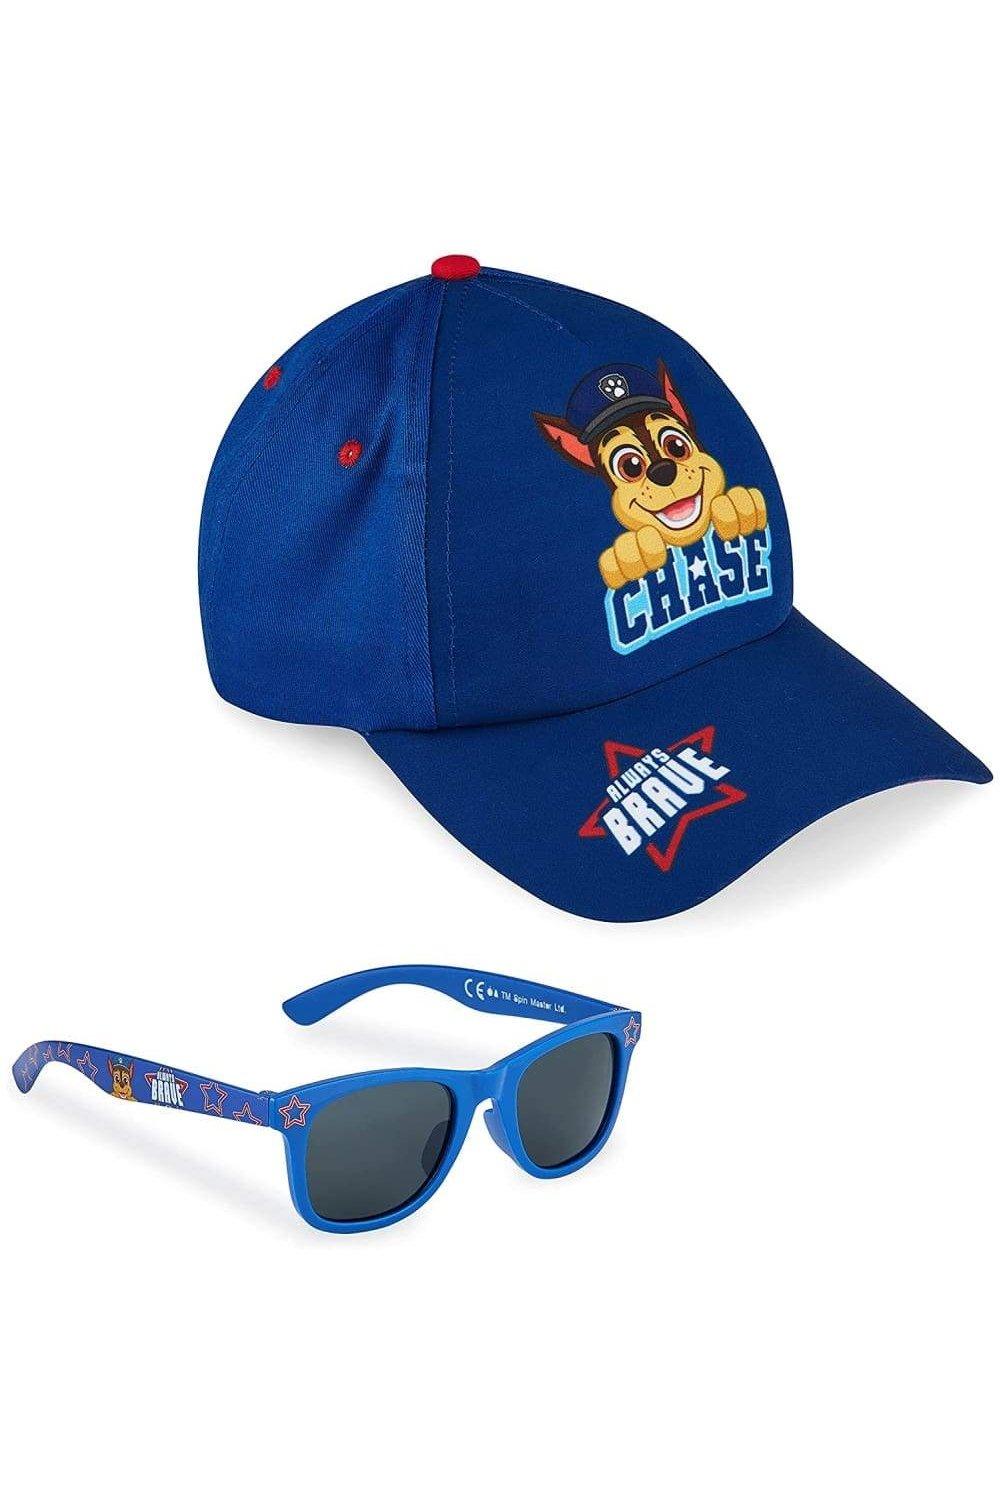 Бейсболка и солнцезащитные очки Chase Paw Patrol, синий al кепка с защитой от солнца пустая спортивная кепка уличная солнцезащитная бейсбольная кепка для тренировок однотонная бейсбольная кепка